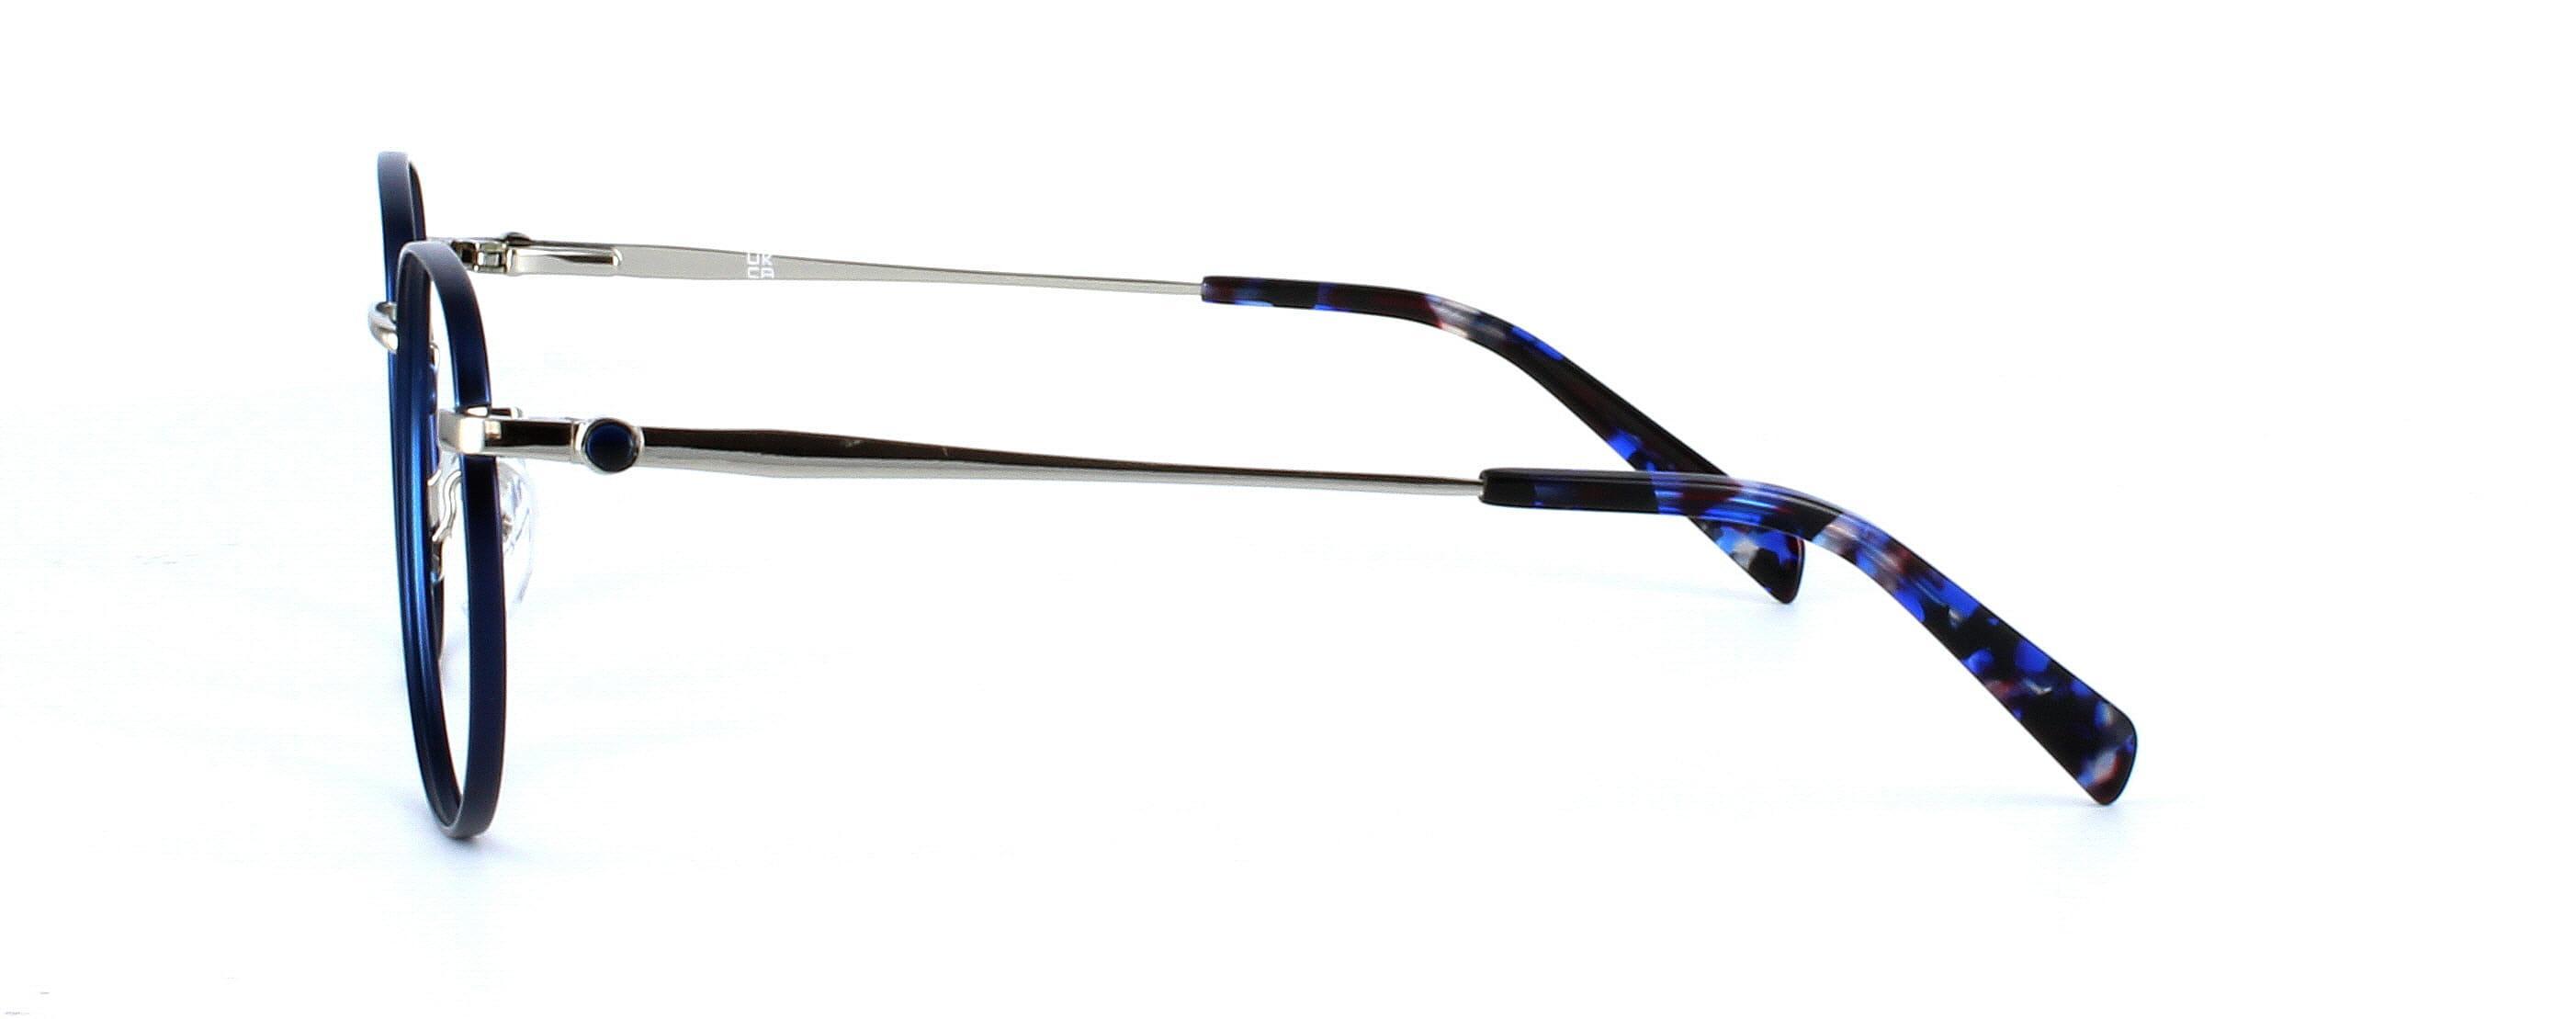 Borealis - Ladies 2-tone round metal glasses - blue & silver - image 2